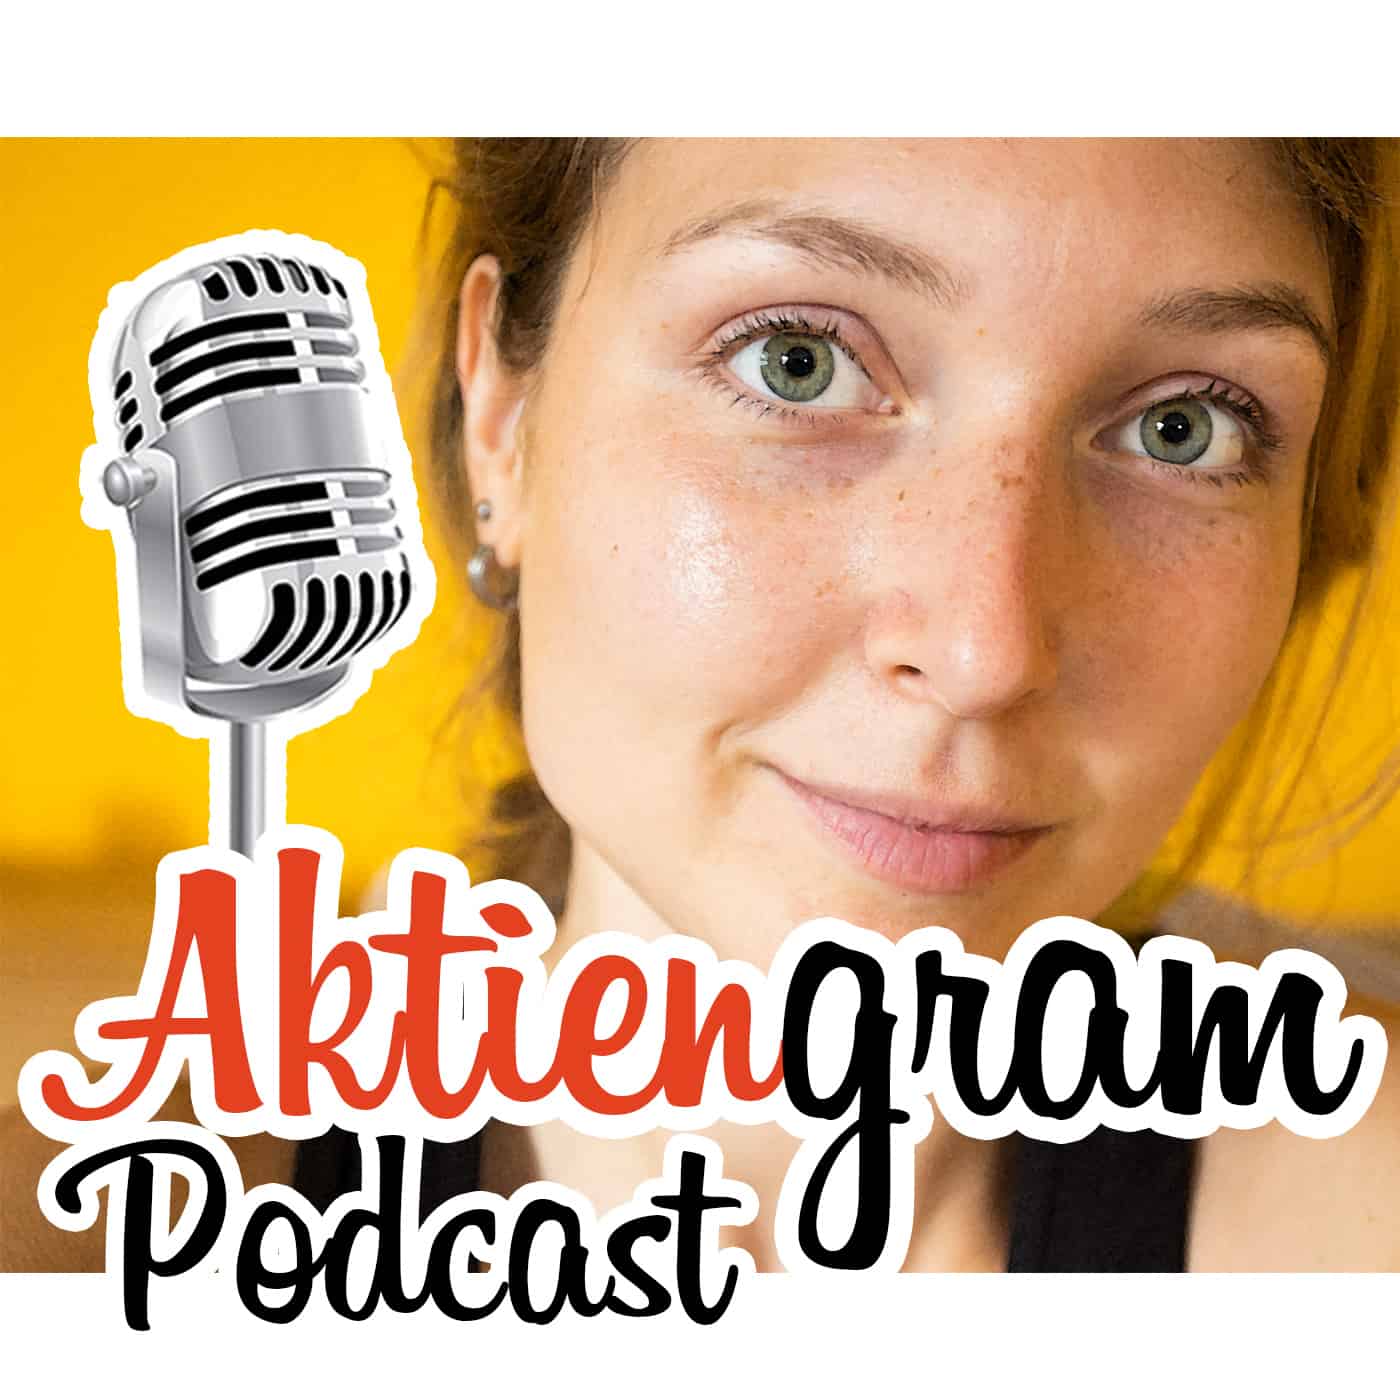 Aktiengram Podcast!